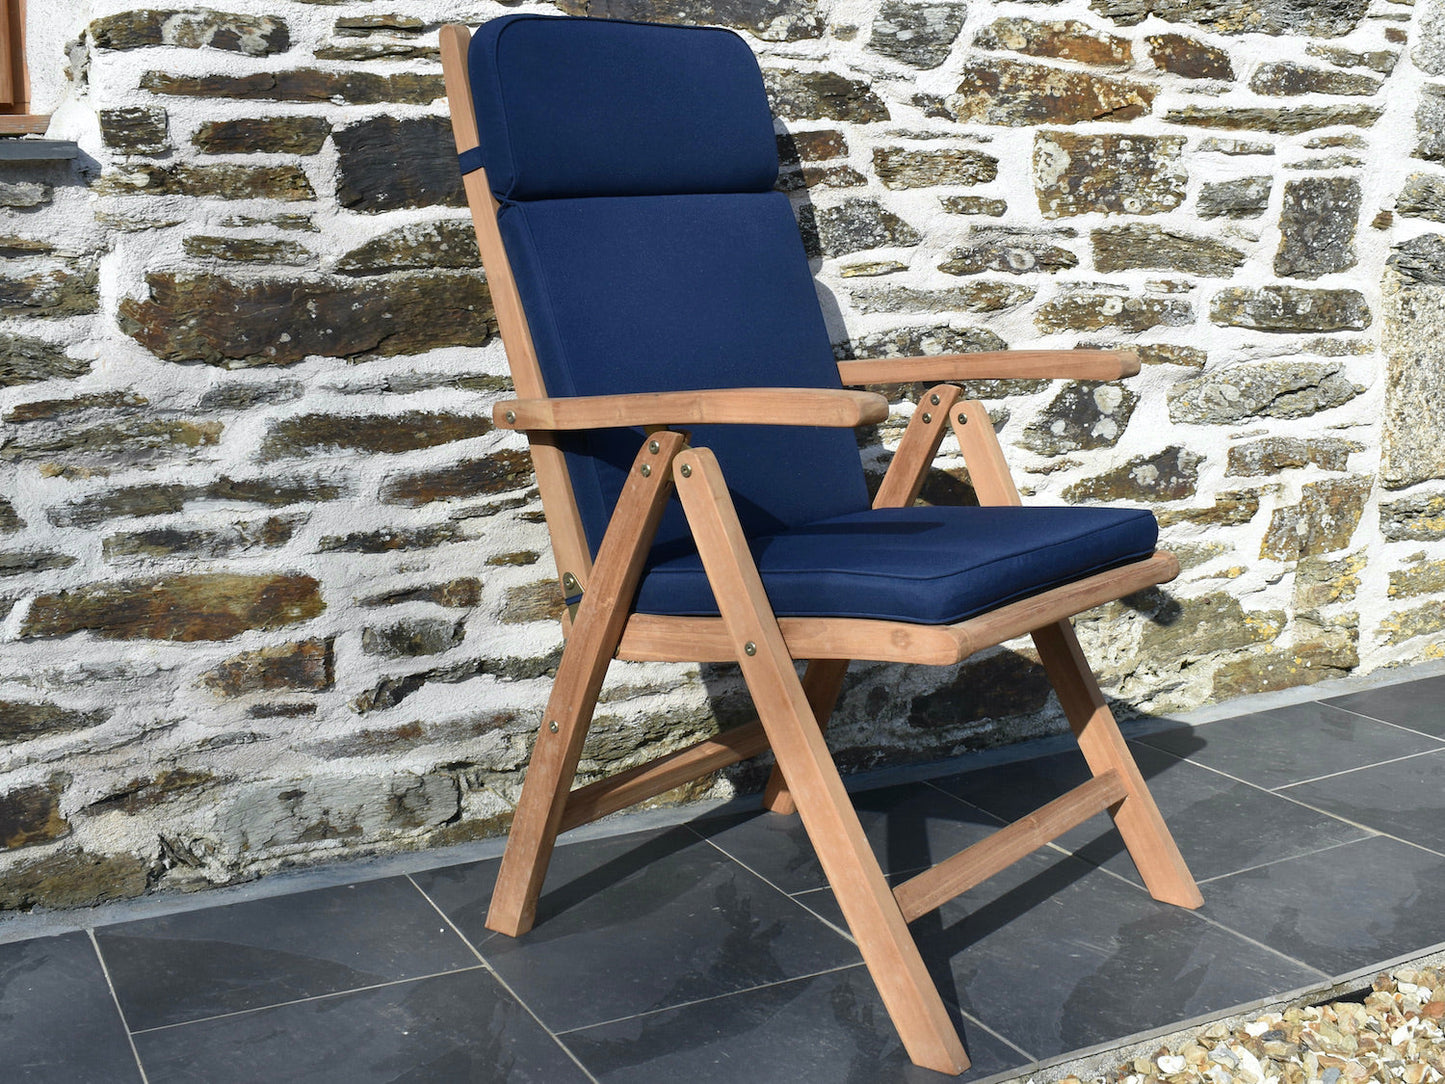 Dark Blue colour outdoor cushion for a garden recliner chair